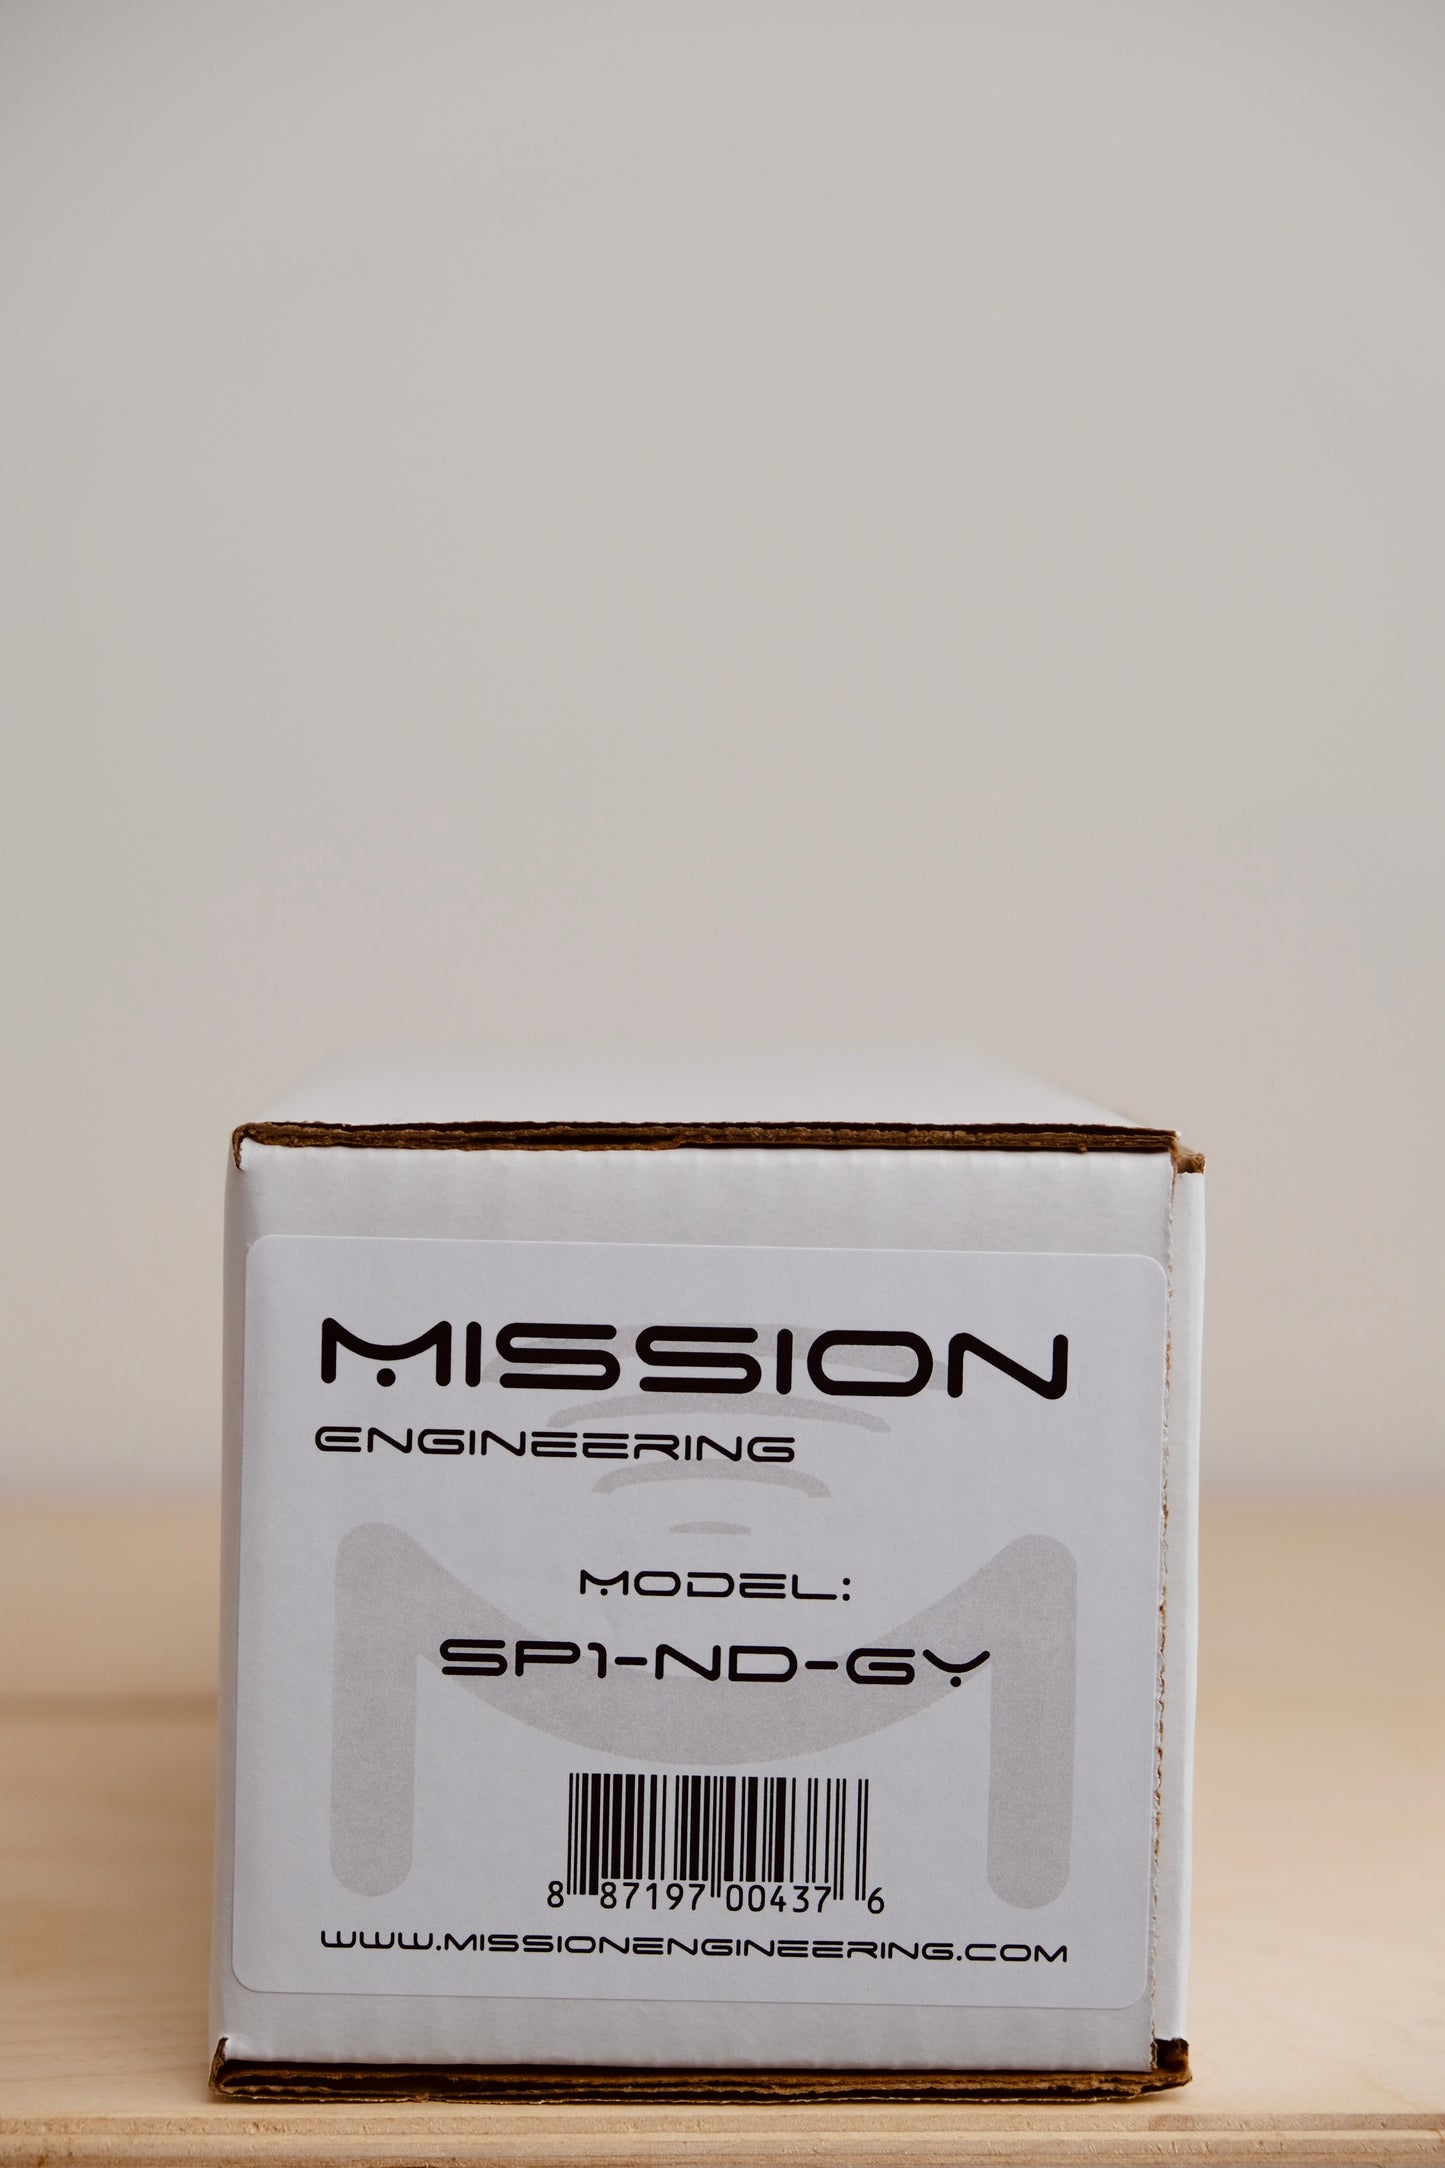 Mission Engineering NeuralDSP Quad Cortex SP1-ND-GY Metallic Grey